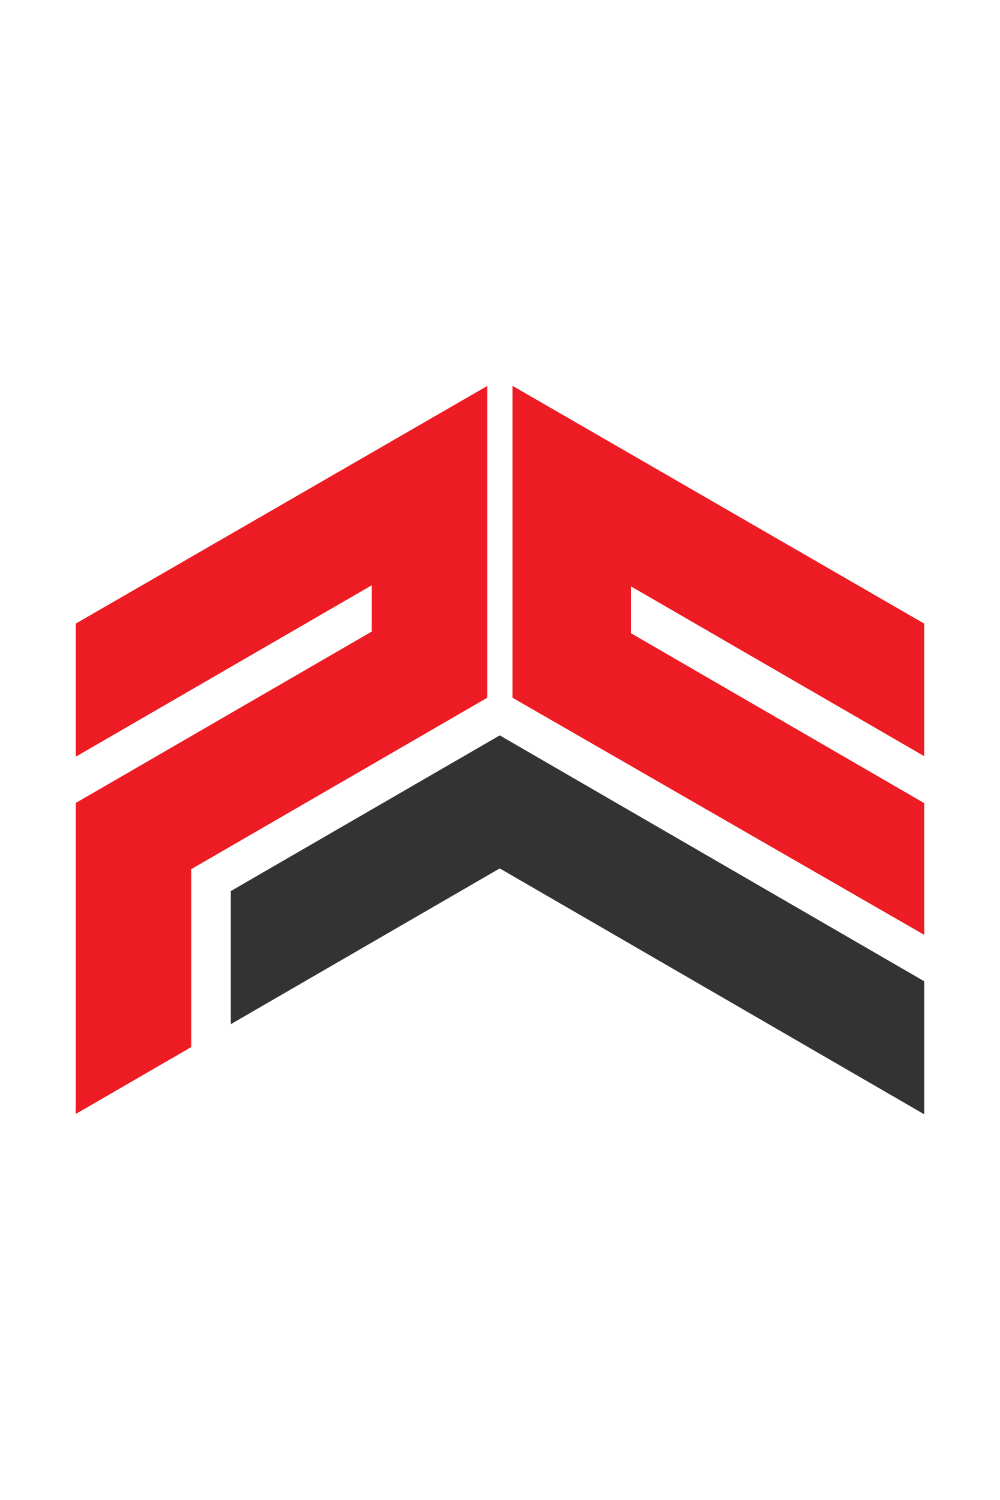 Letter PE logo design for Real Estate business pinterest preview image.